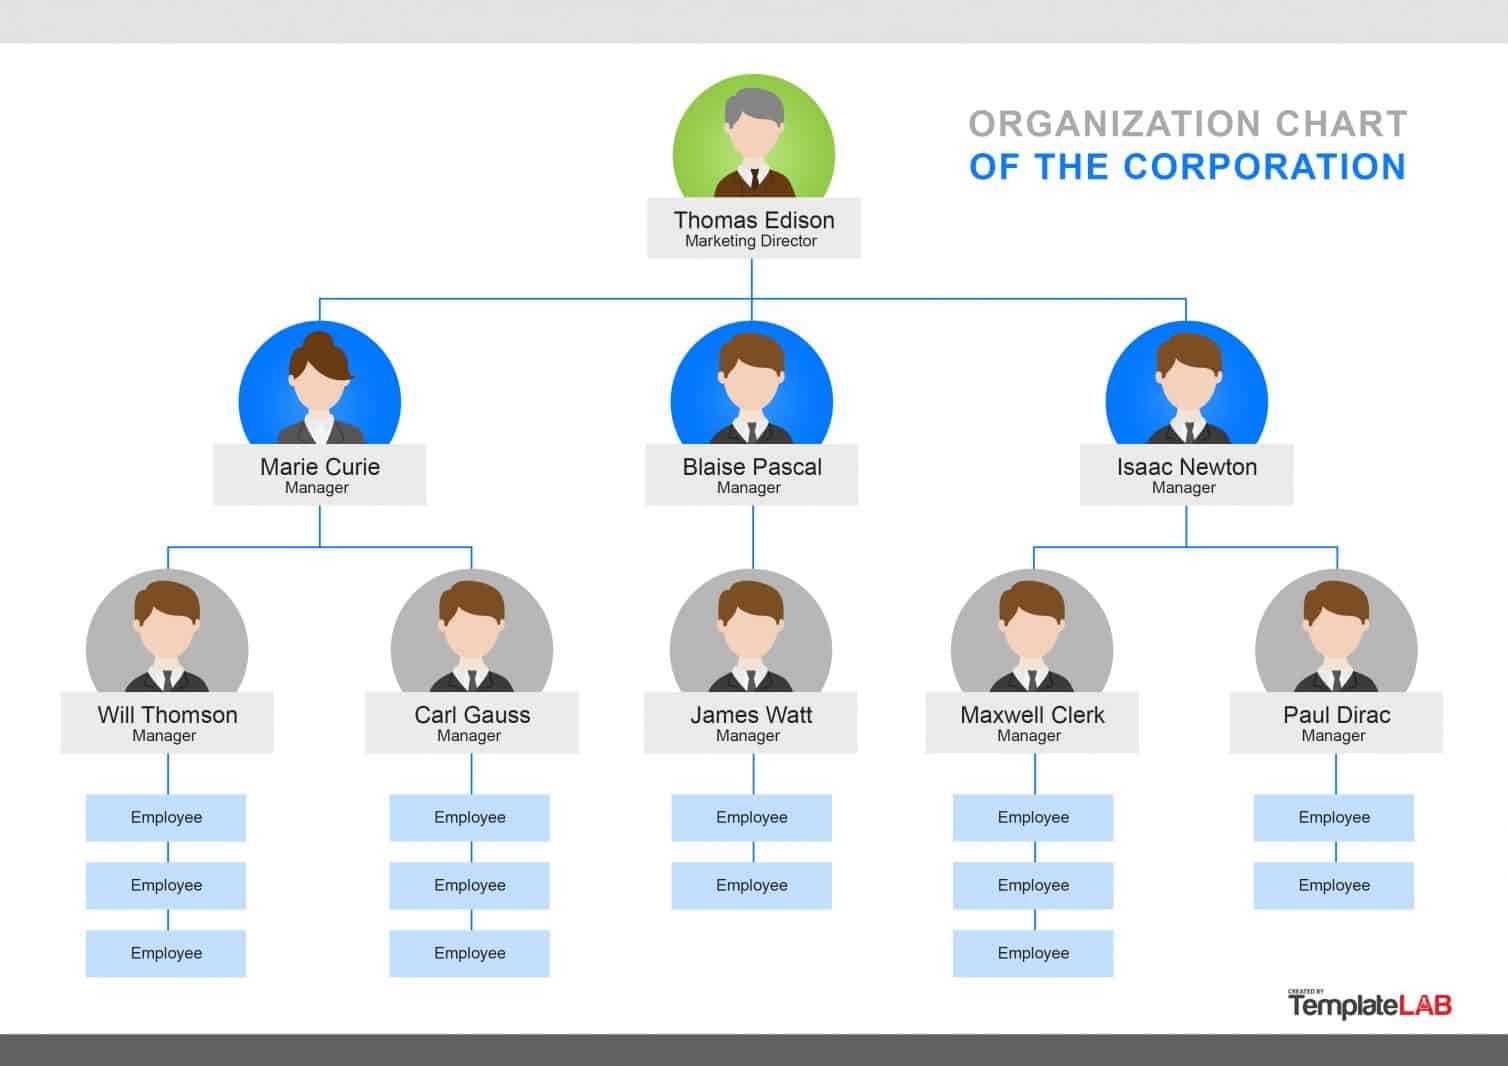 Organization Chart With Photos Template - Cuna Throughout Organization Chart Template Word